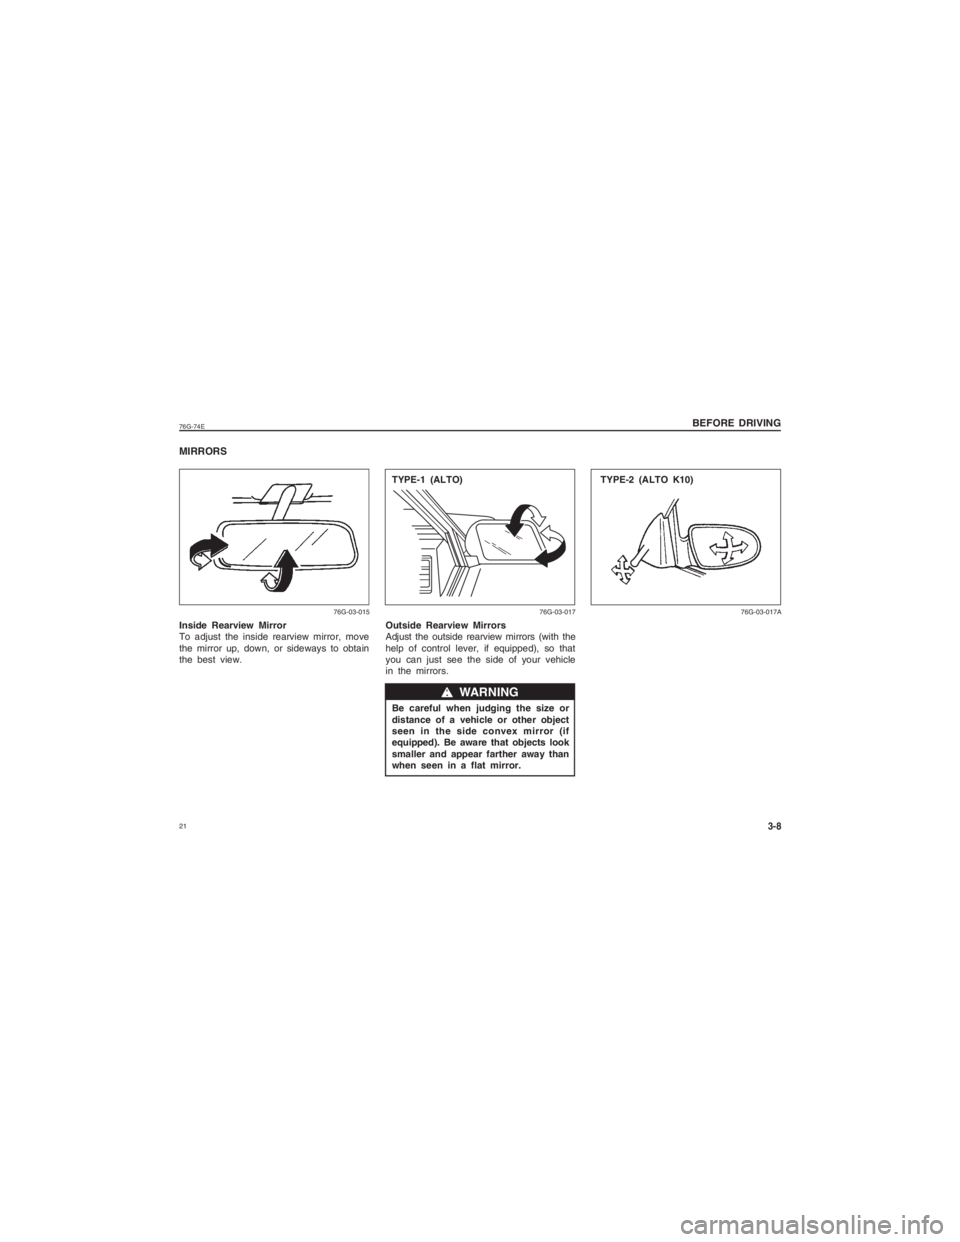 SUZUKI ALTO 2014 User Guide  2176G-74E
BEFORE DRIVING
3-8
MIRRORSInside Rearview Mirror
To adjust the inside rearview mirror, move
the mirror up, down, or sideways to obtain
the best view.
76G-03-015
Outside Rearview Mirrors
Adj